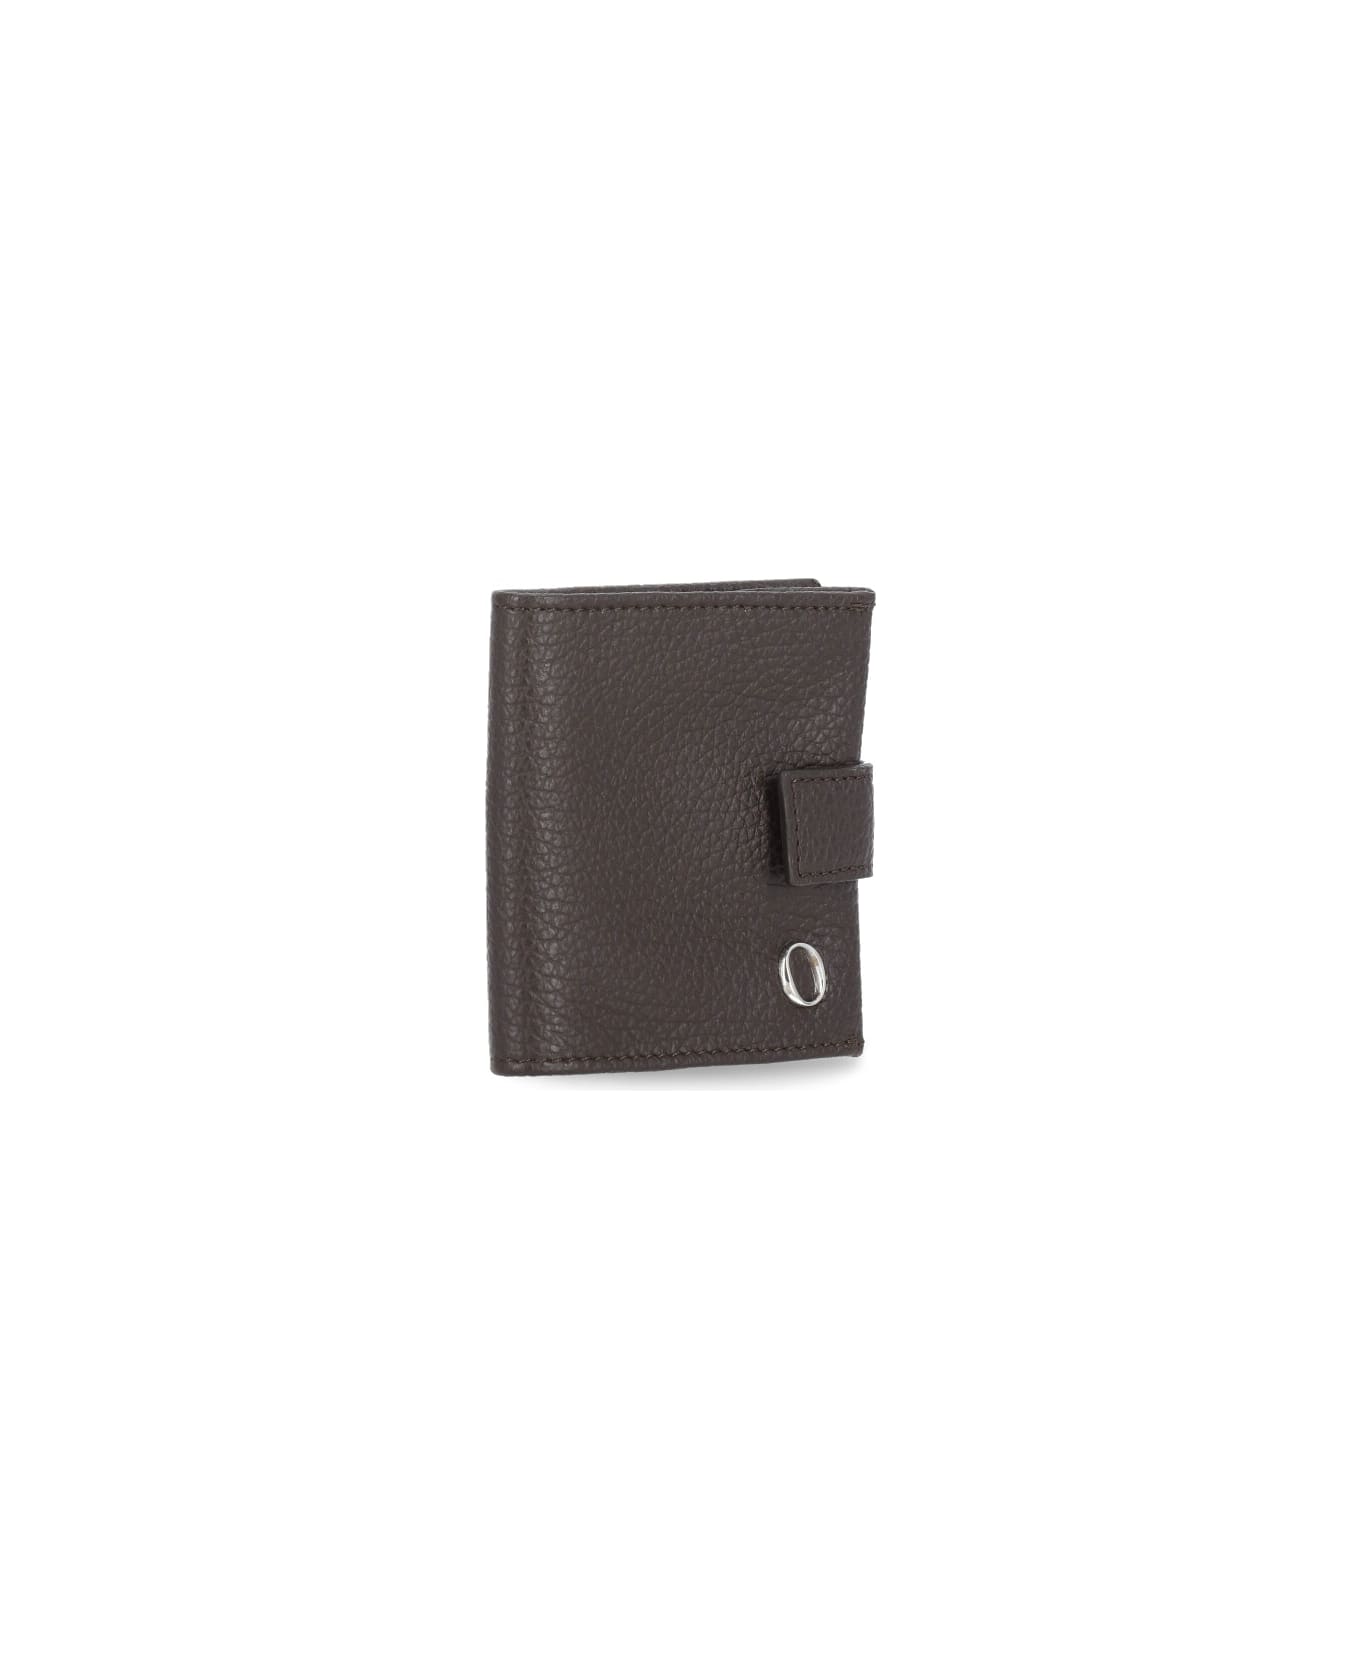 Orciani Micron Leather Purse - Brown 財布